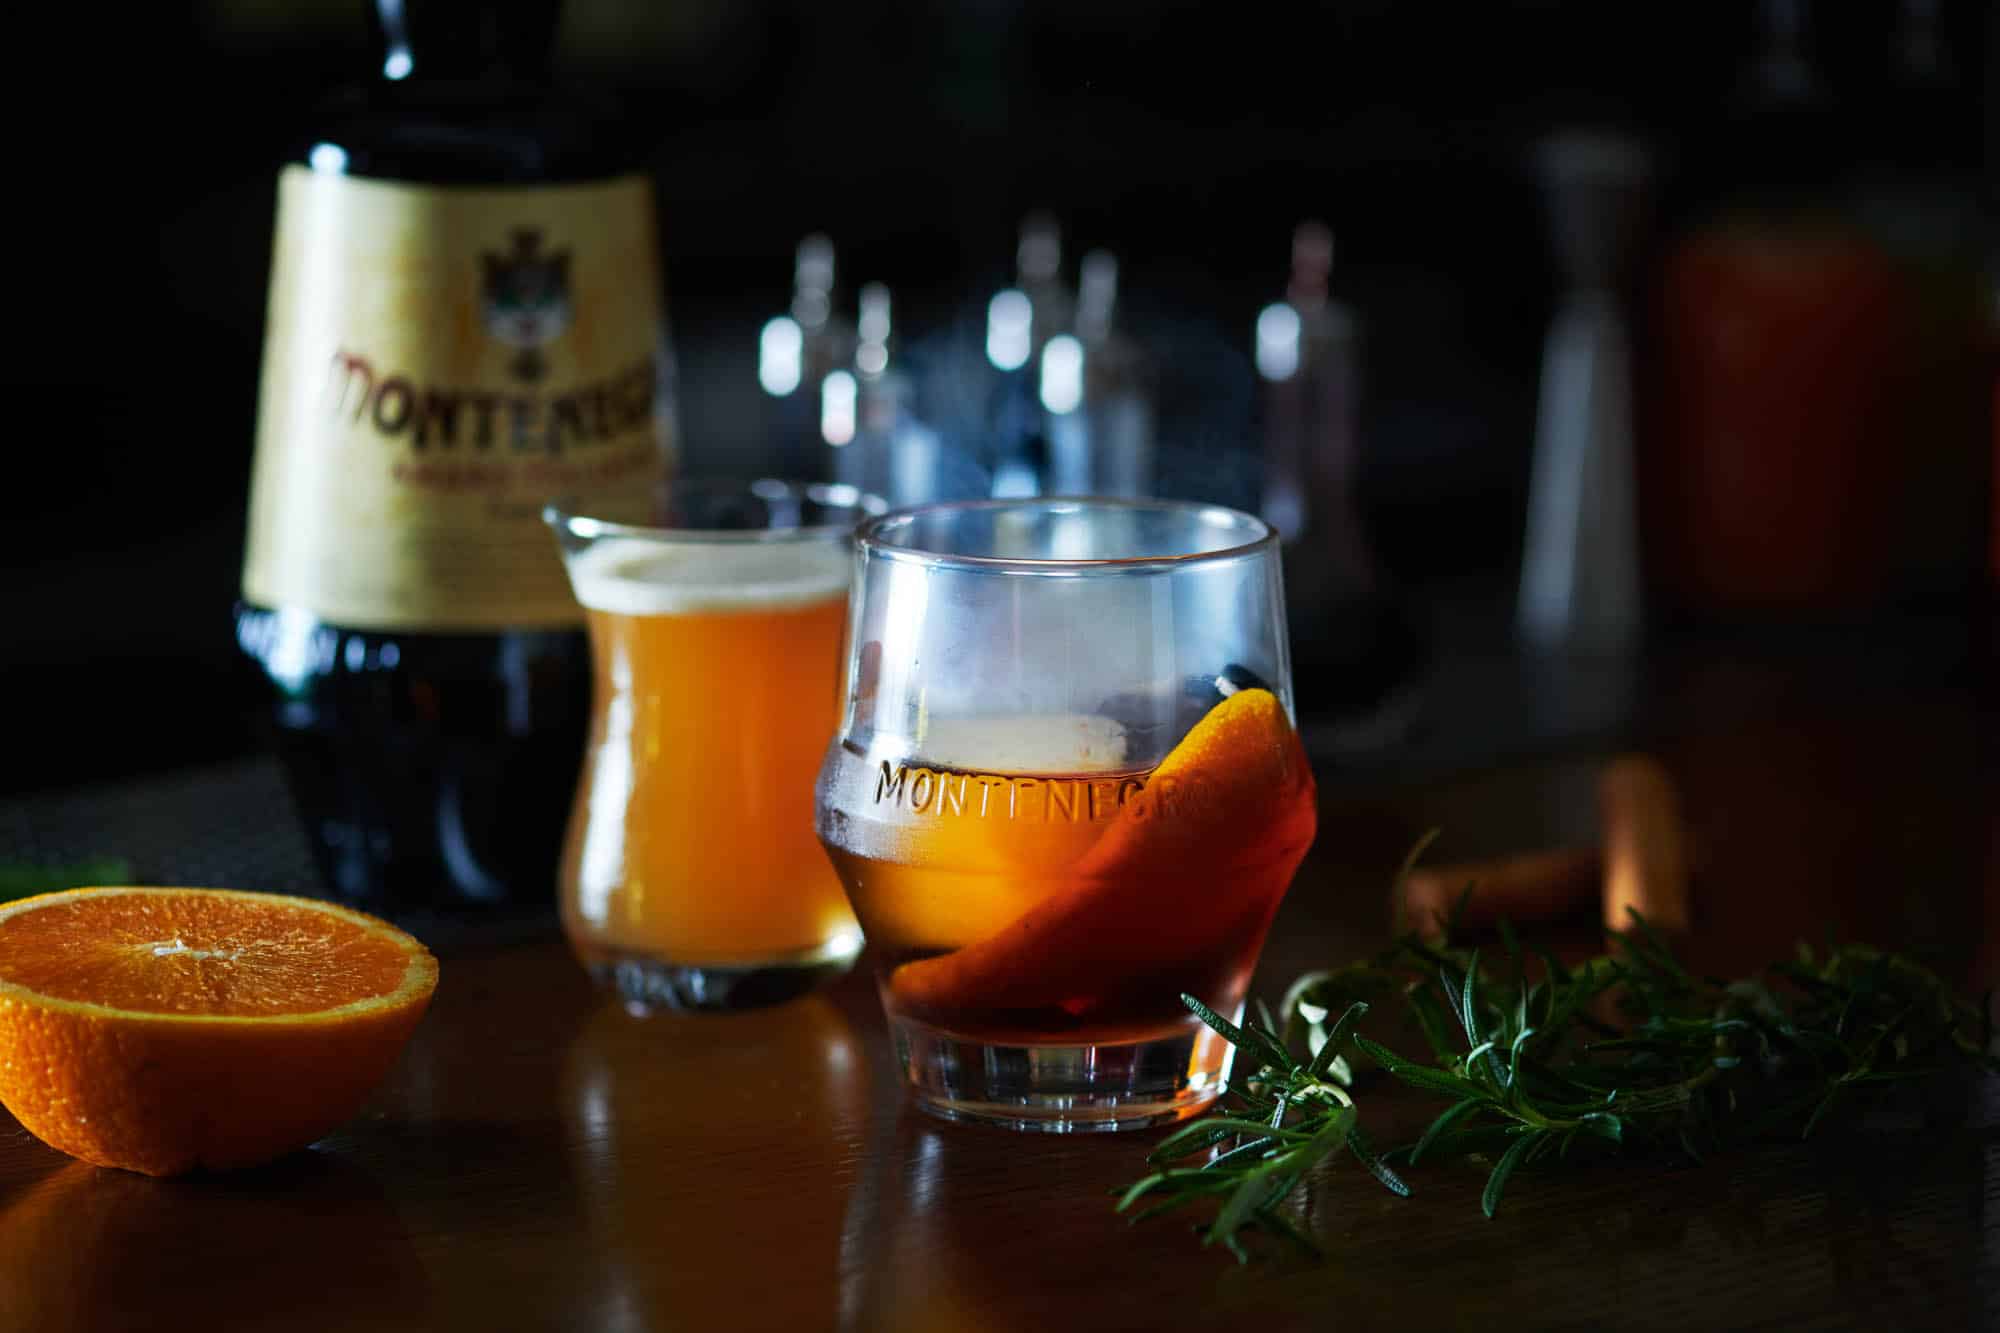 NYC Beverage photography of Amaro Montenegro